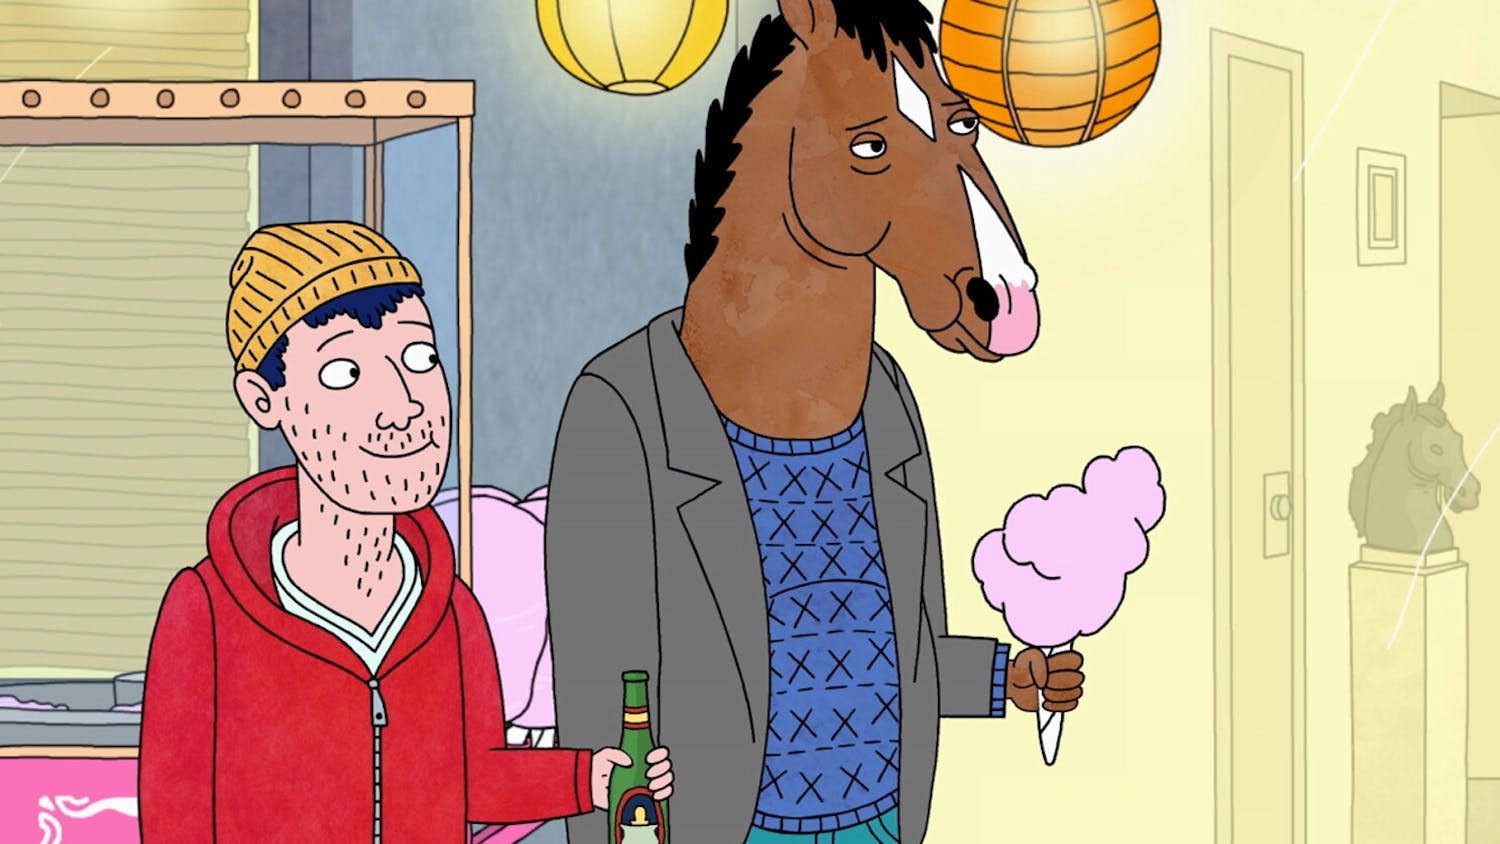 Netflix’s “BoJack Horseman,” featuring Todd (left) and BoJack (right).